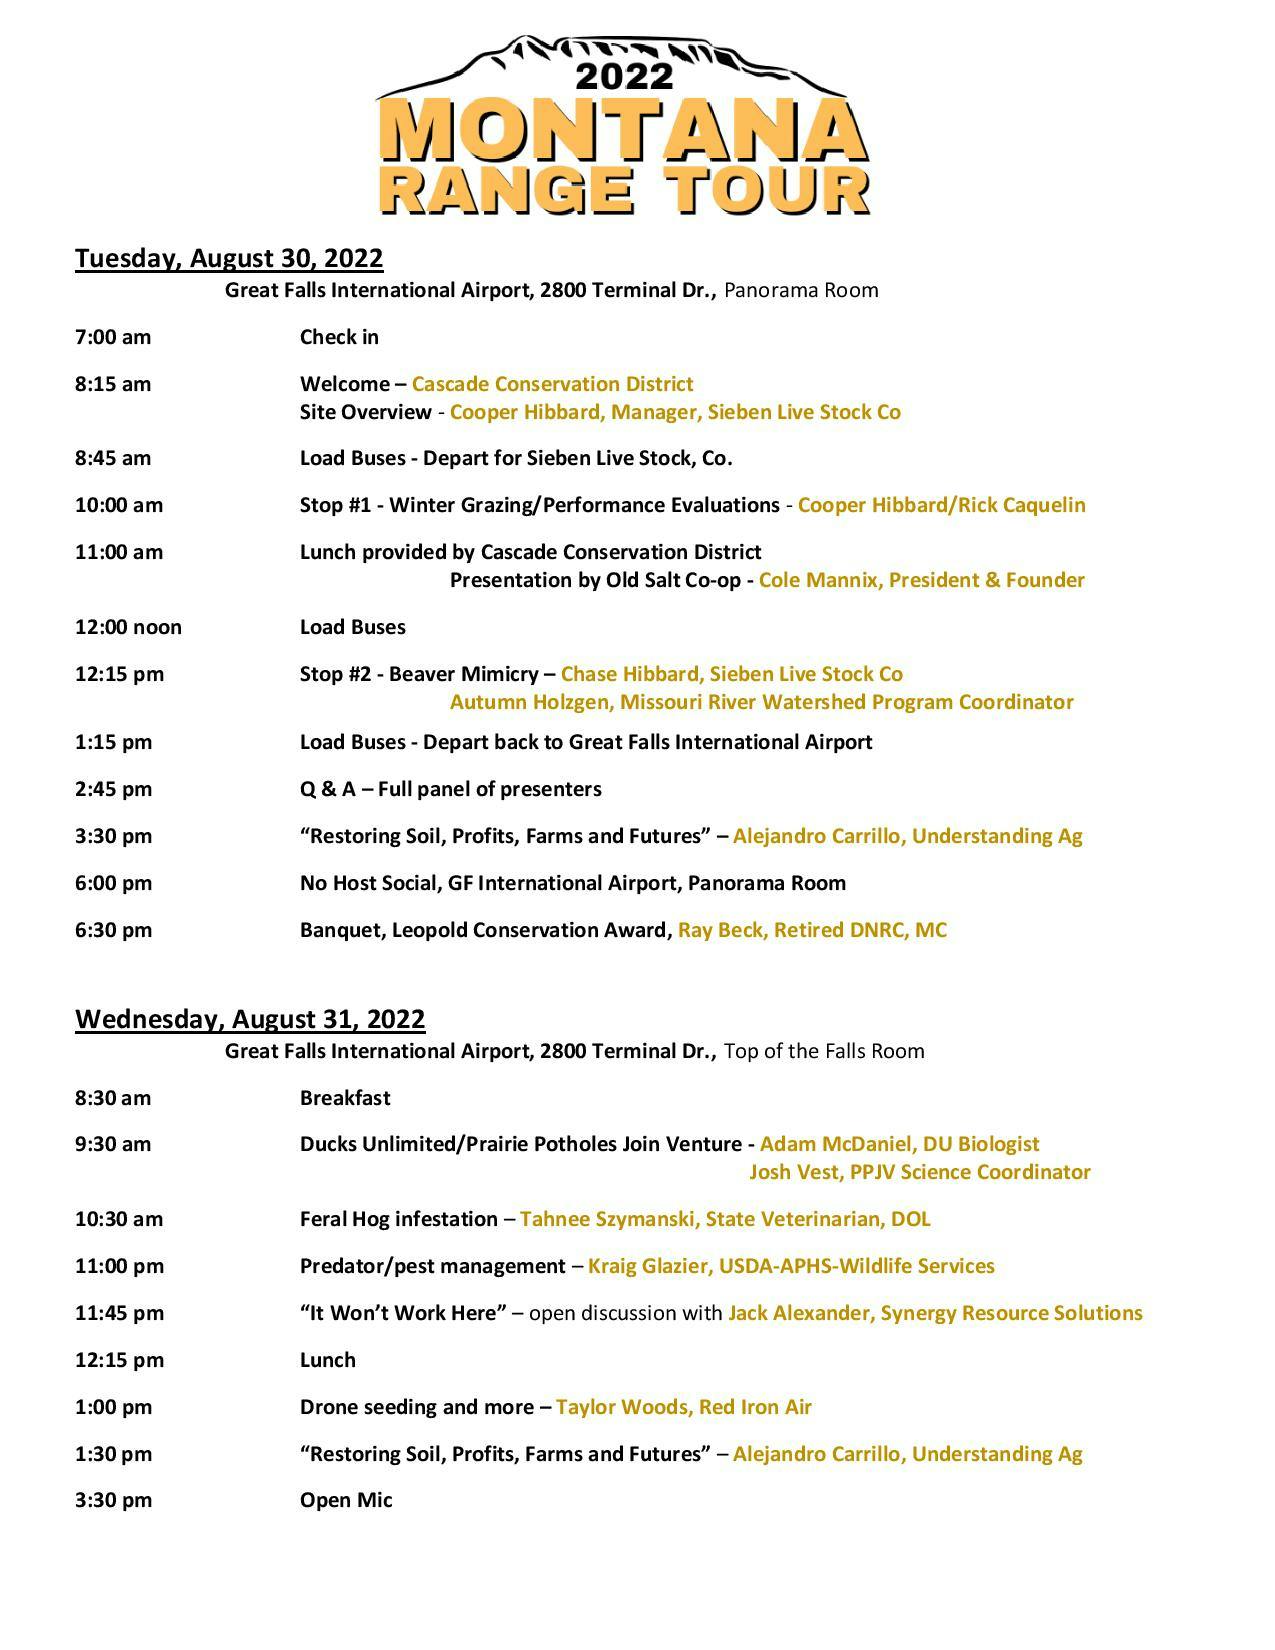 2022 Montana Range Tour Agenda JPG